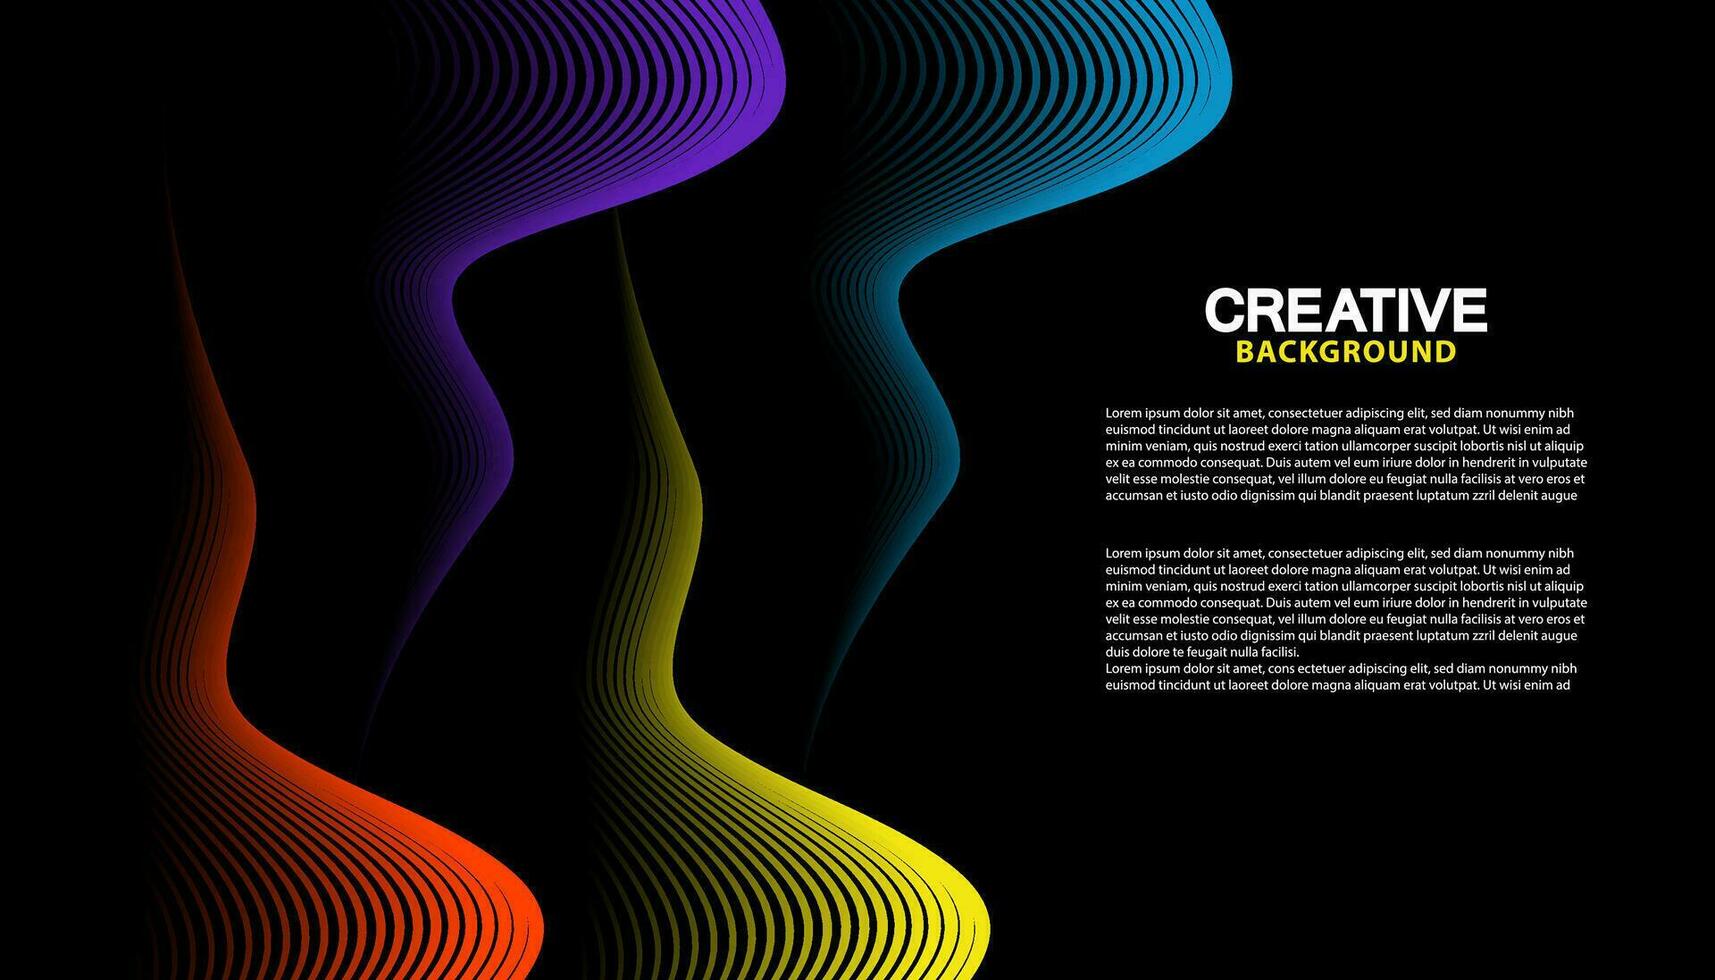 abstrakt färgrik Vinka linje vektor bakgrund. linje kurva modern design för din idéer, banderoller, plakat, affischer. eps10 vektor mall.